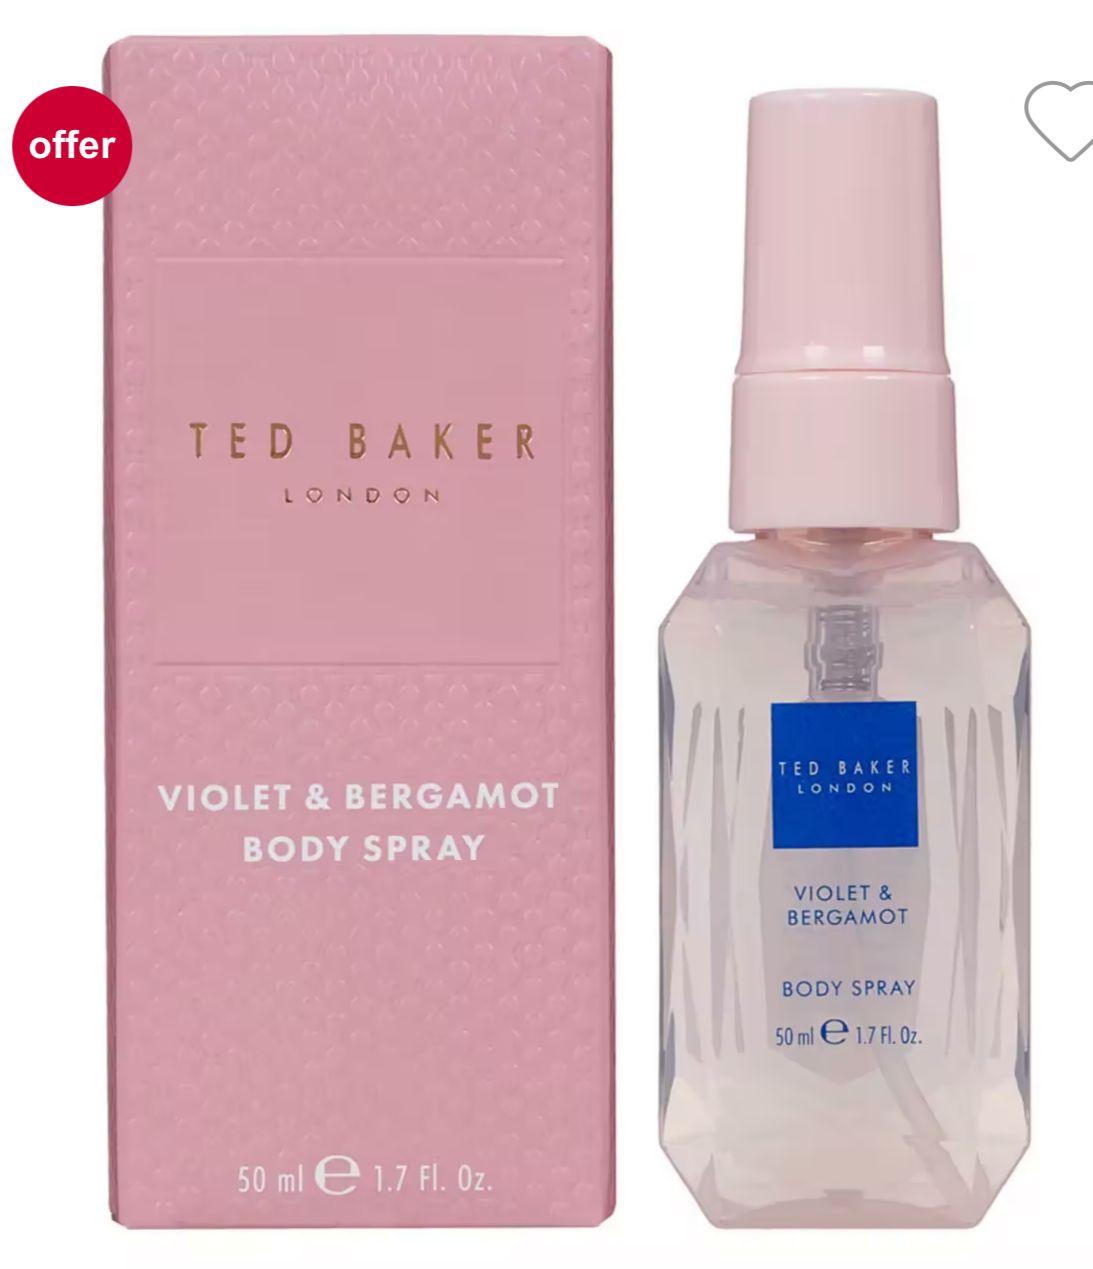 Ted Baker Violet & Bergamot Body Spray